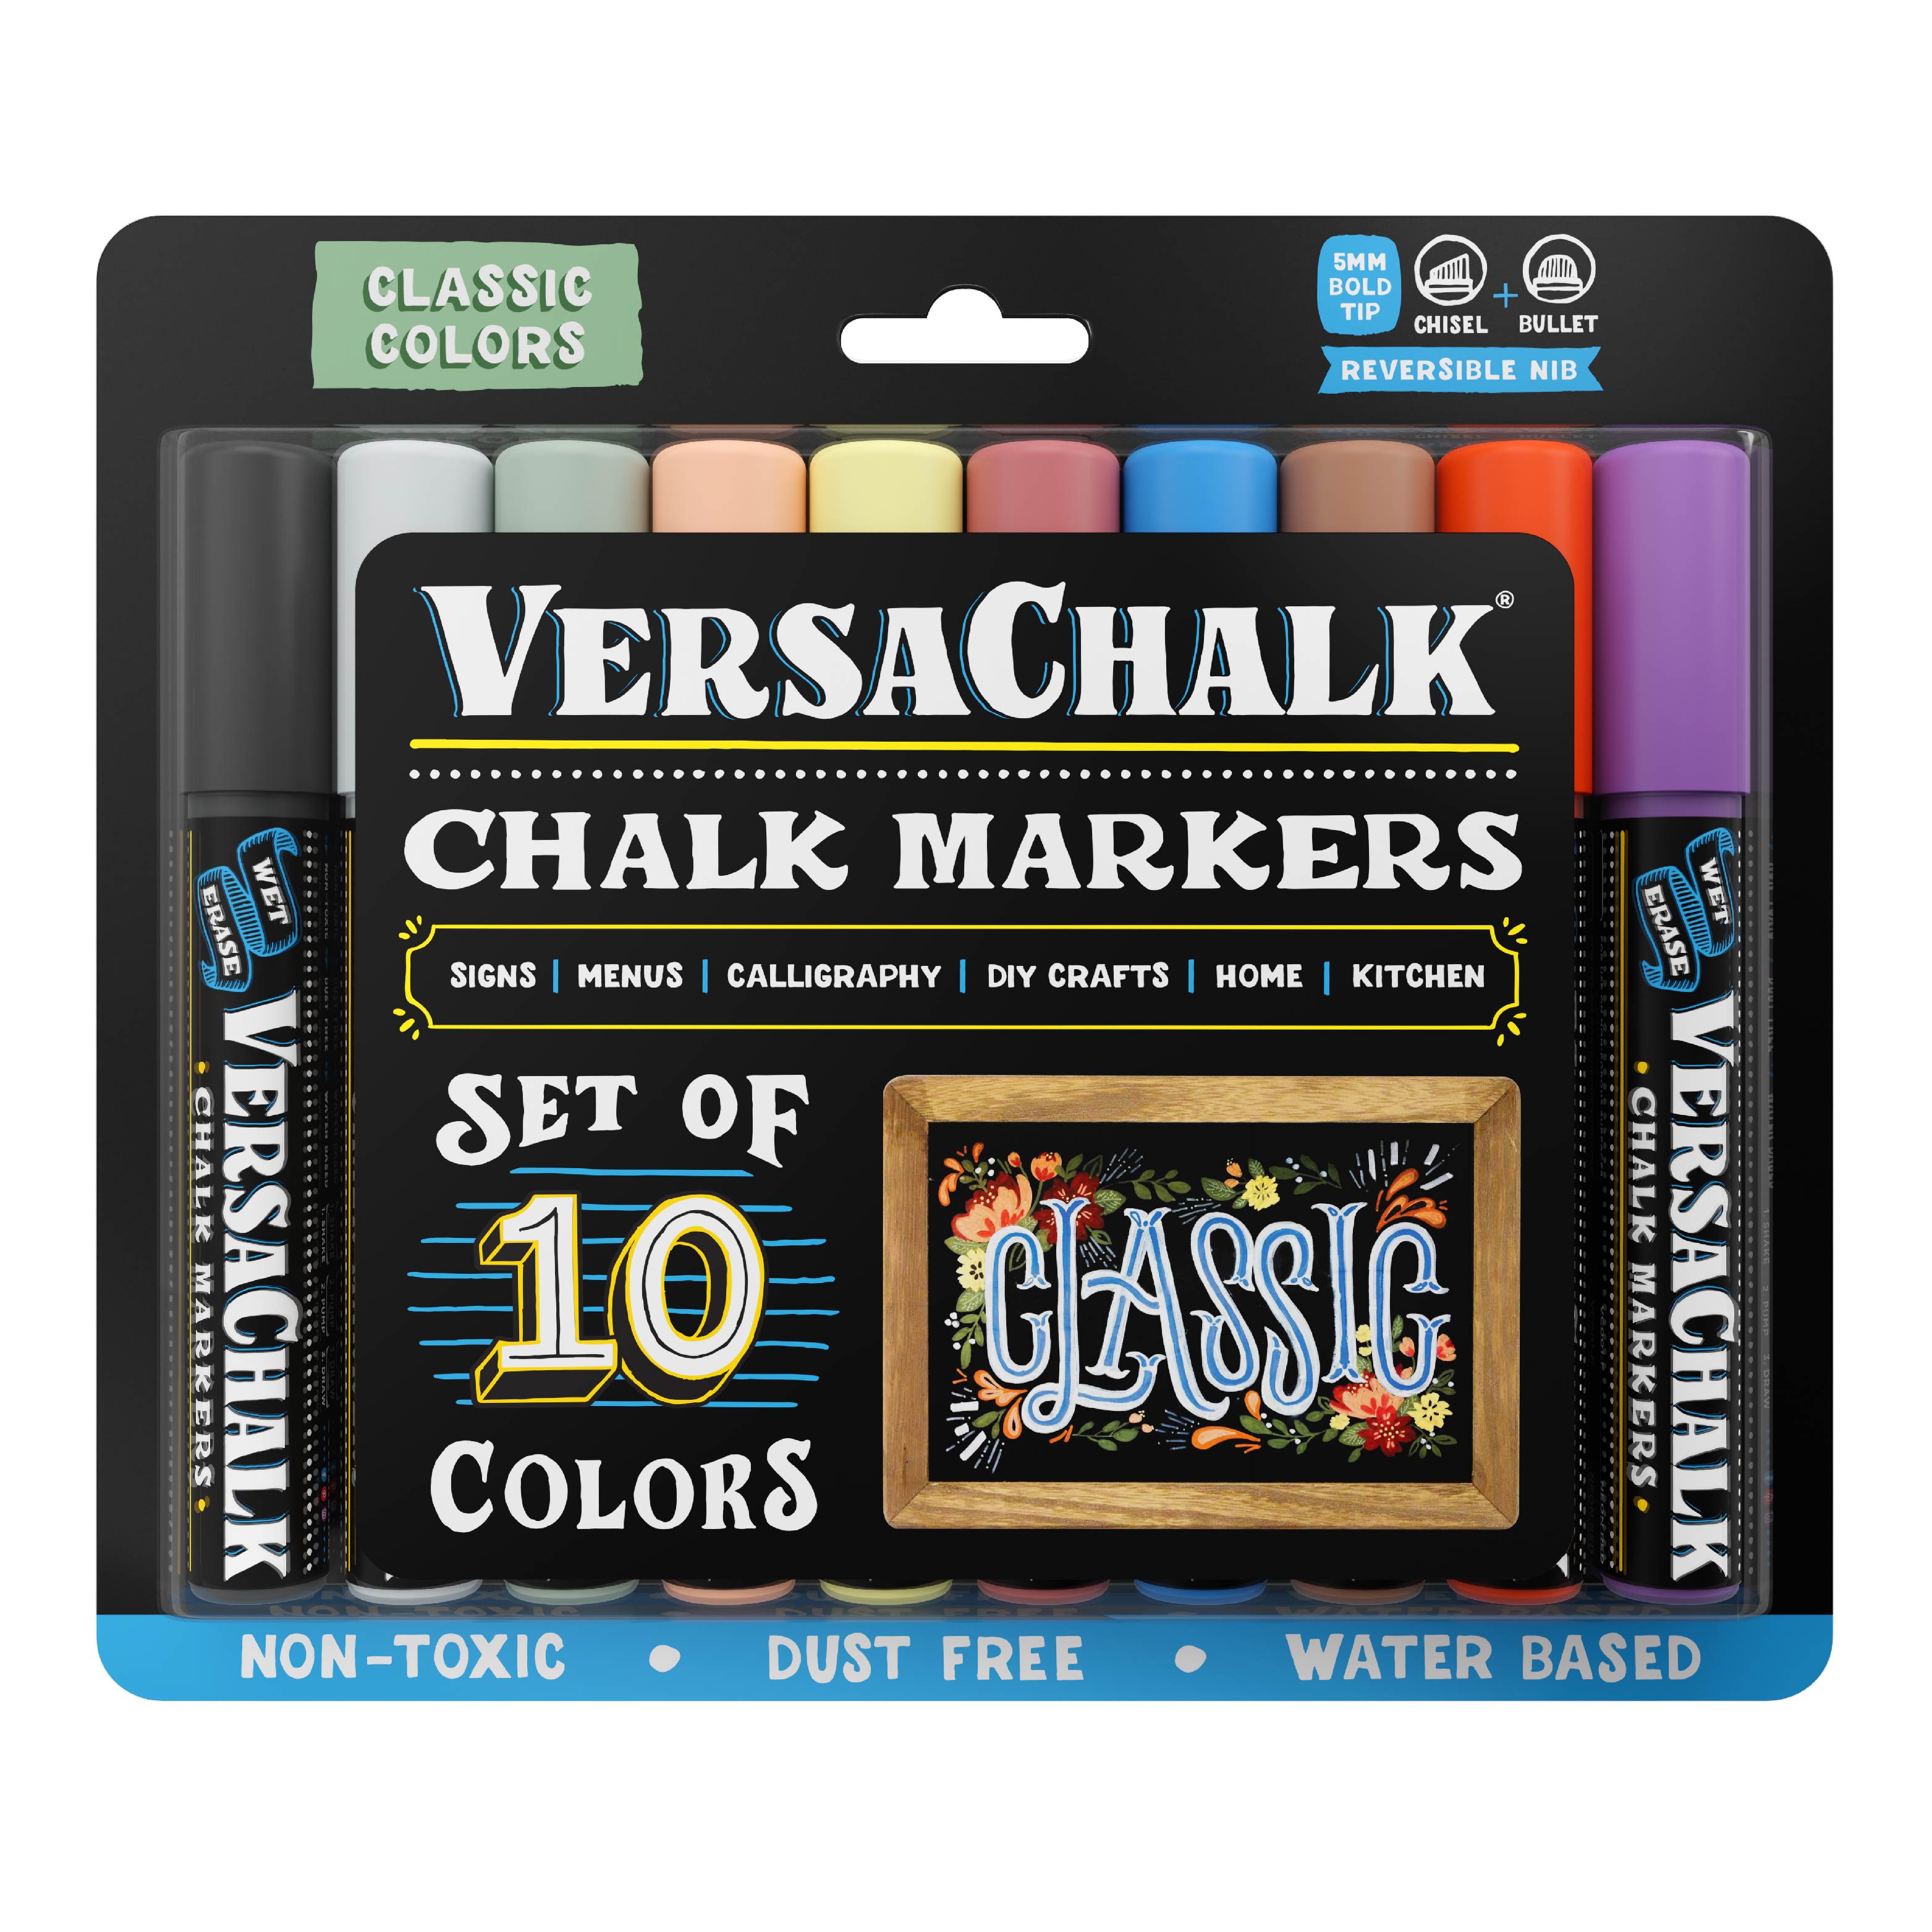 Blue 5mm Chalk